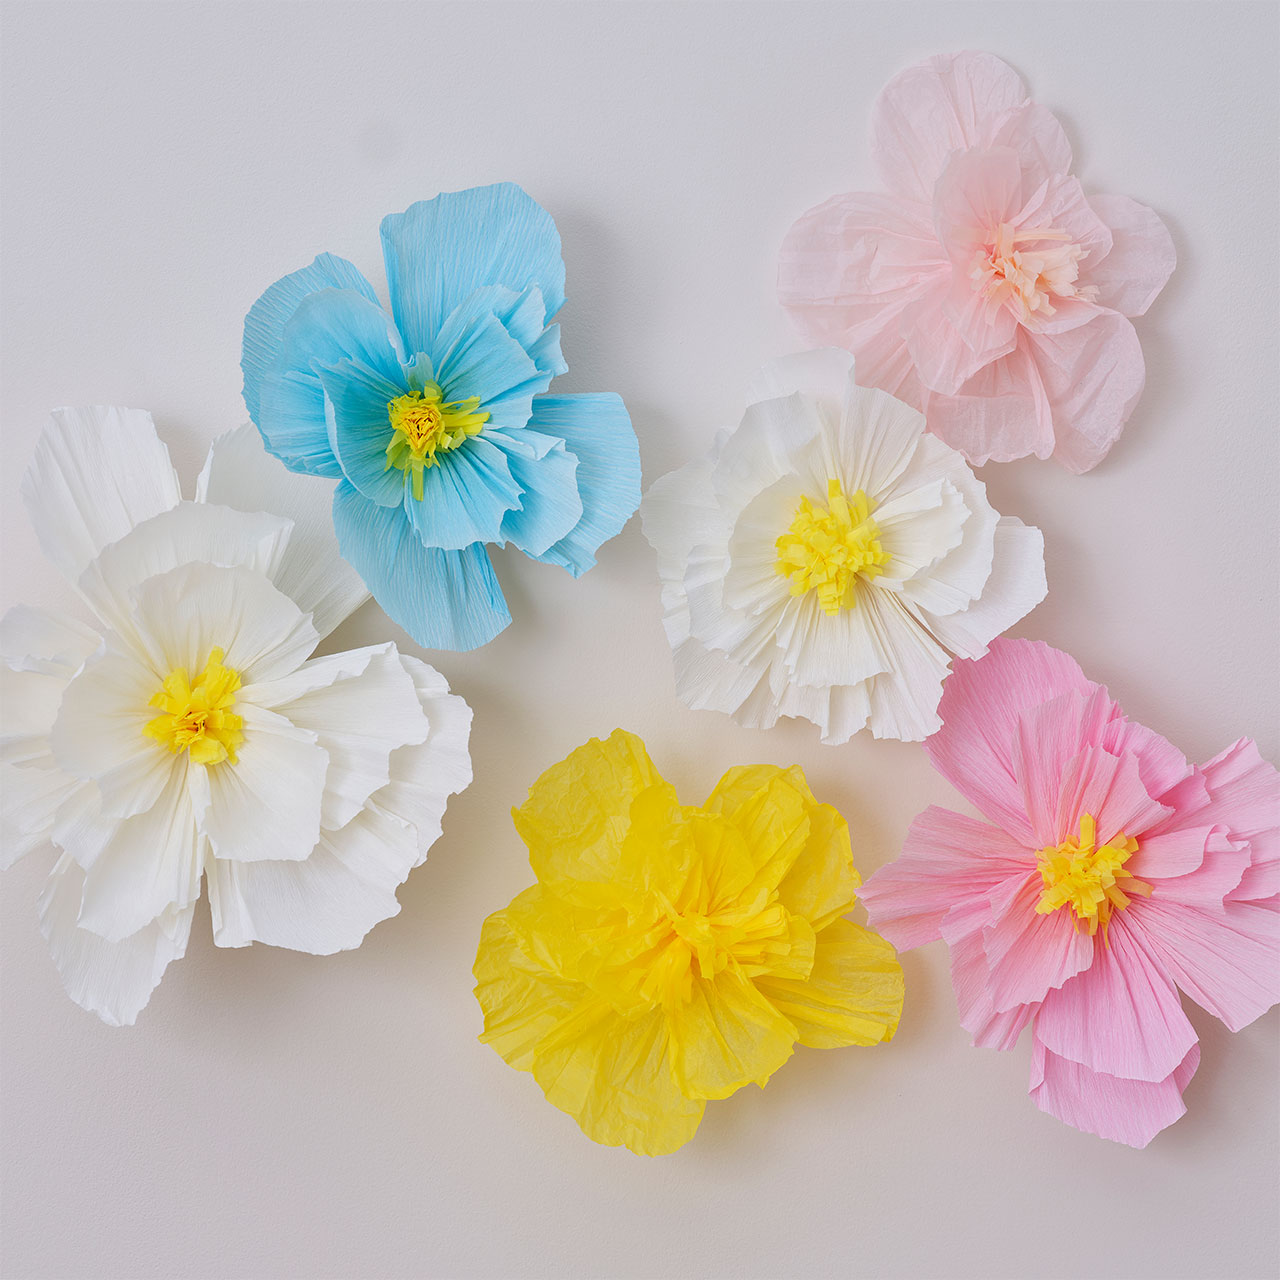 Backdrop - Pastel Tissue Flowers